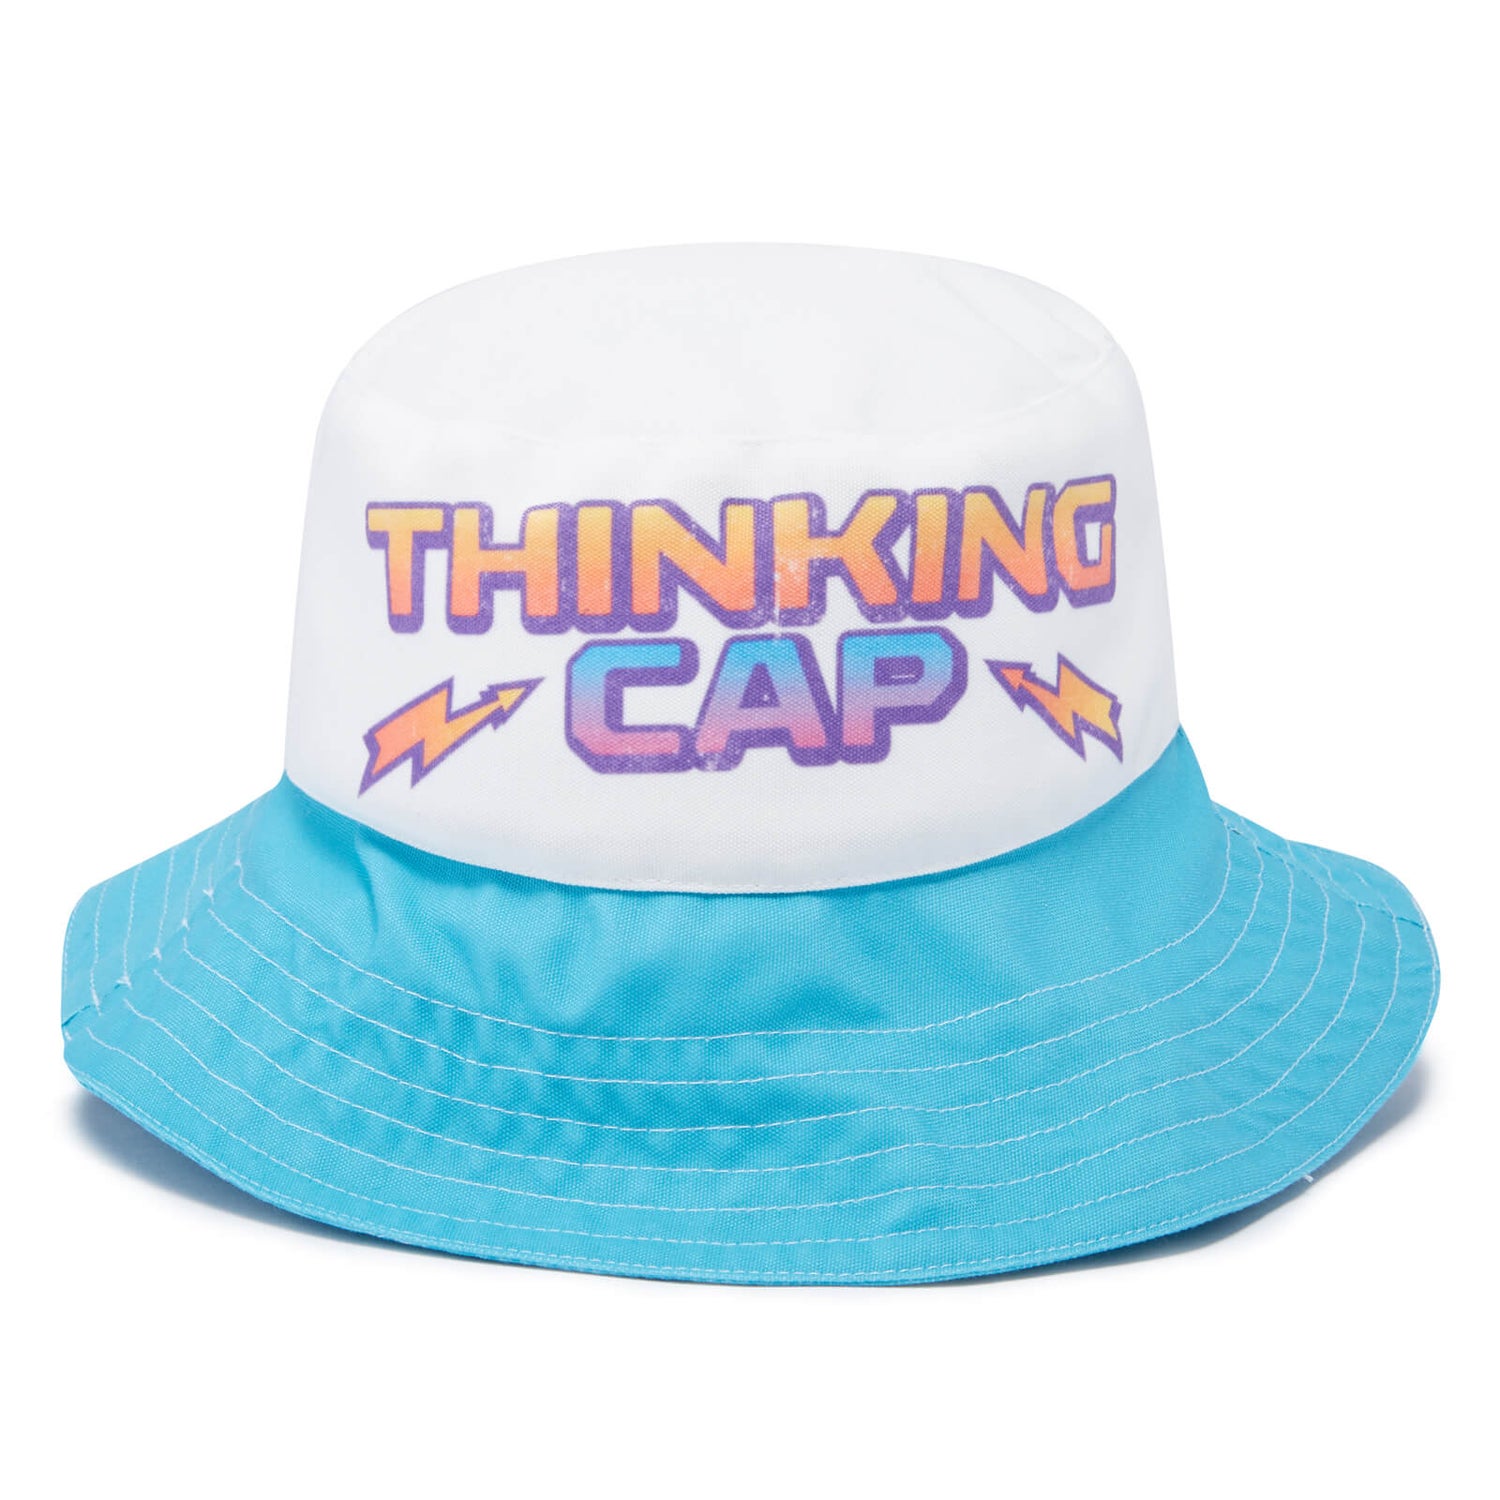 thinking cap images